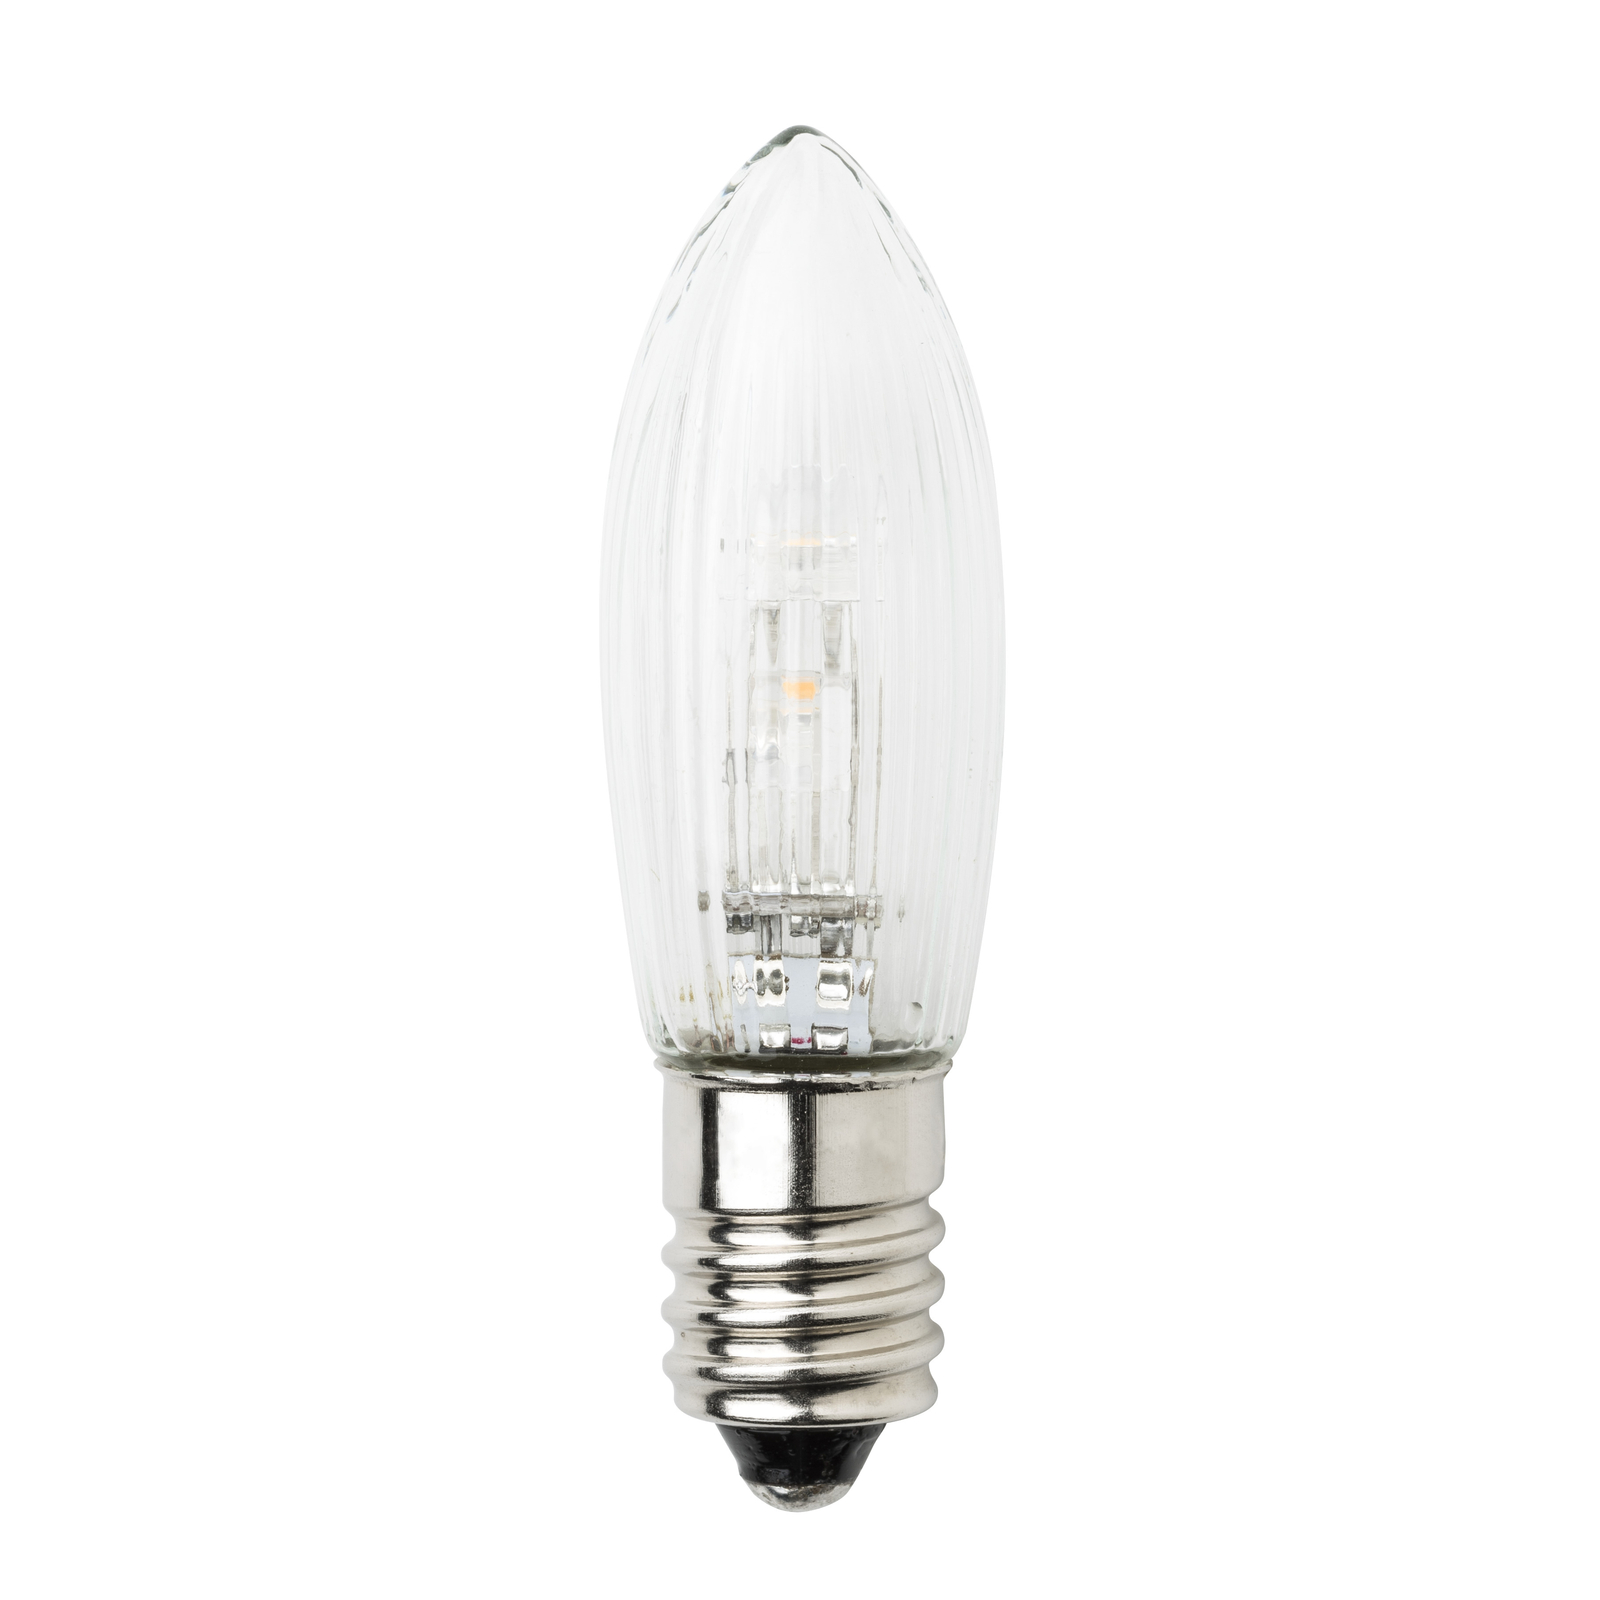 E10 0.3 W 24 V spare bulbs pack of 3